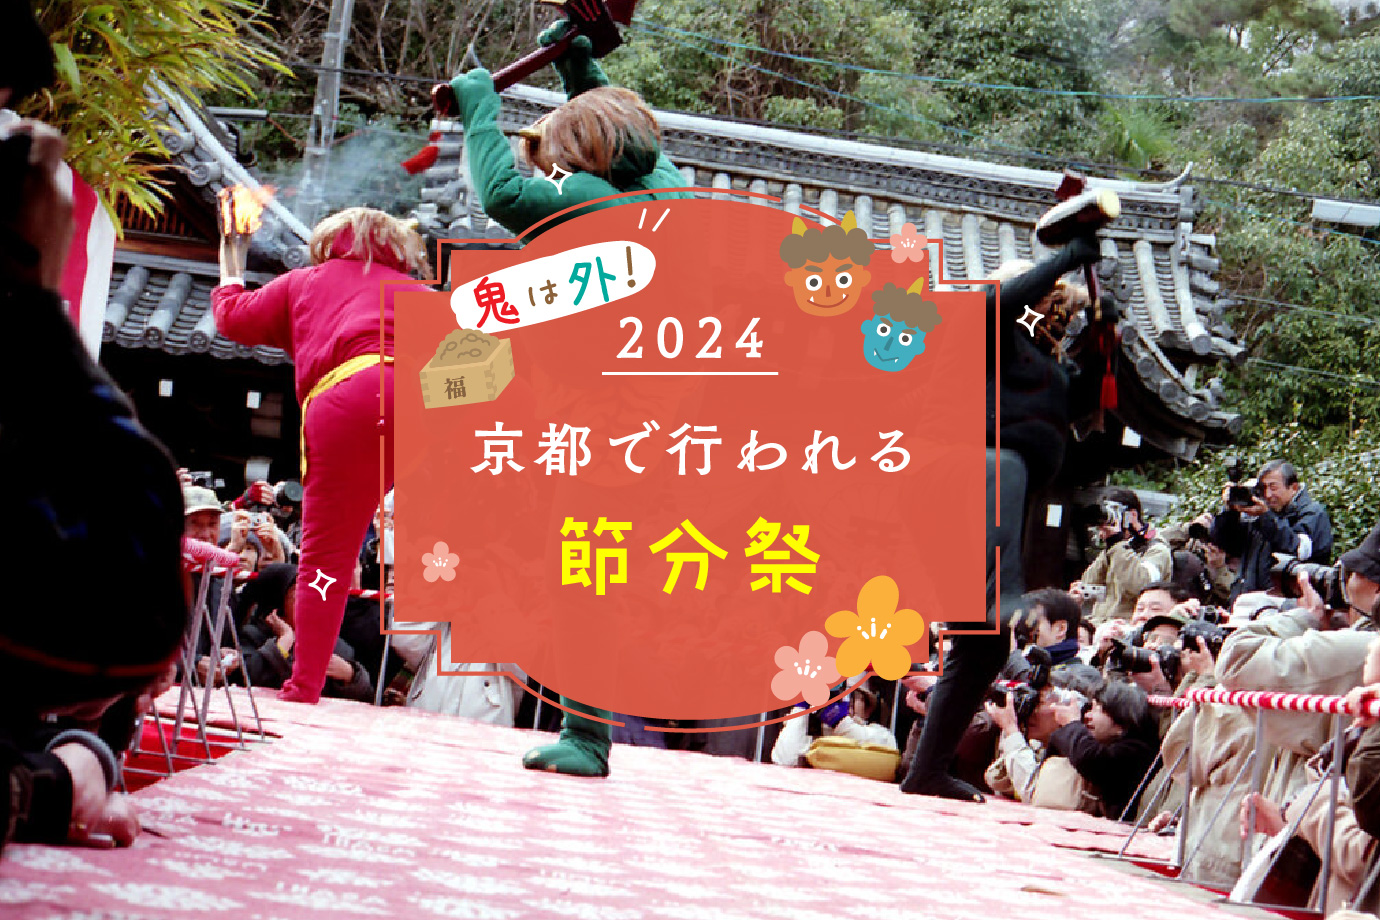 2024] Oni wa soto! Three Setsubun Festivals in Kyoto that Bring